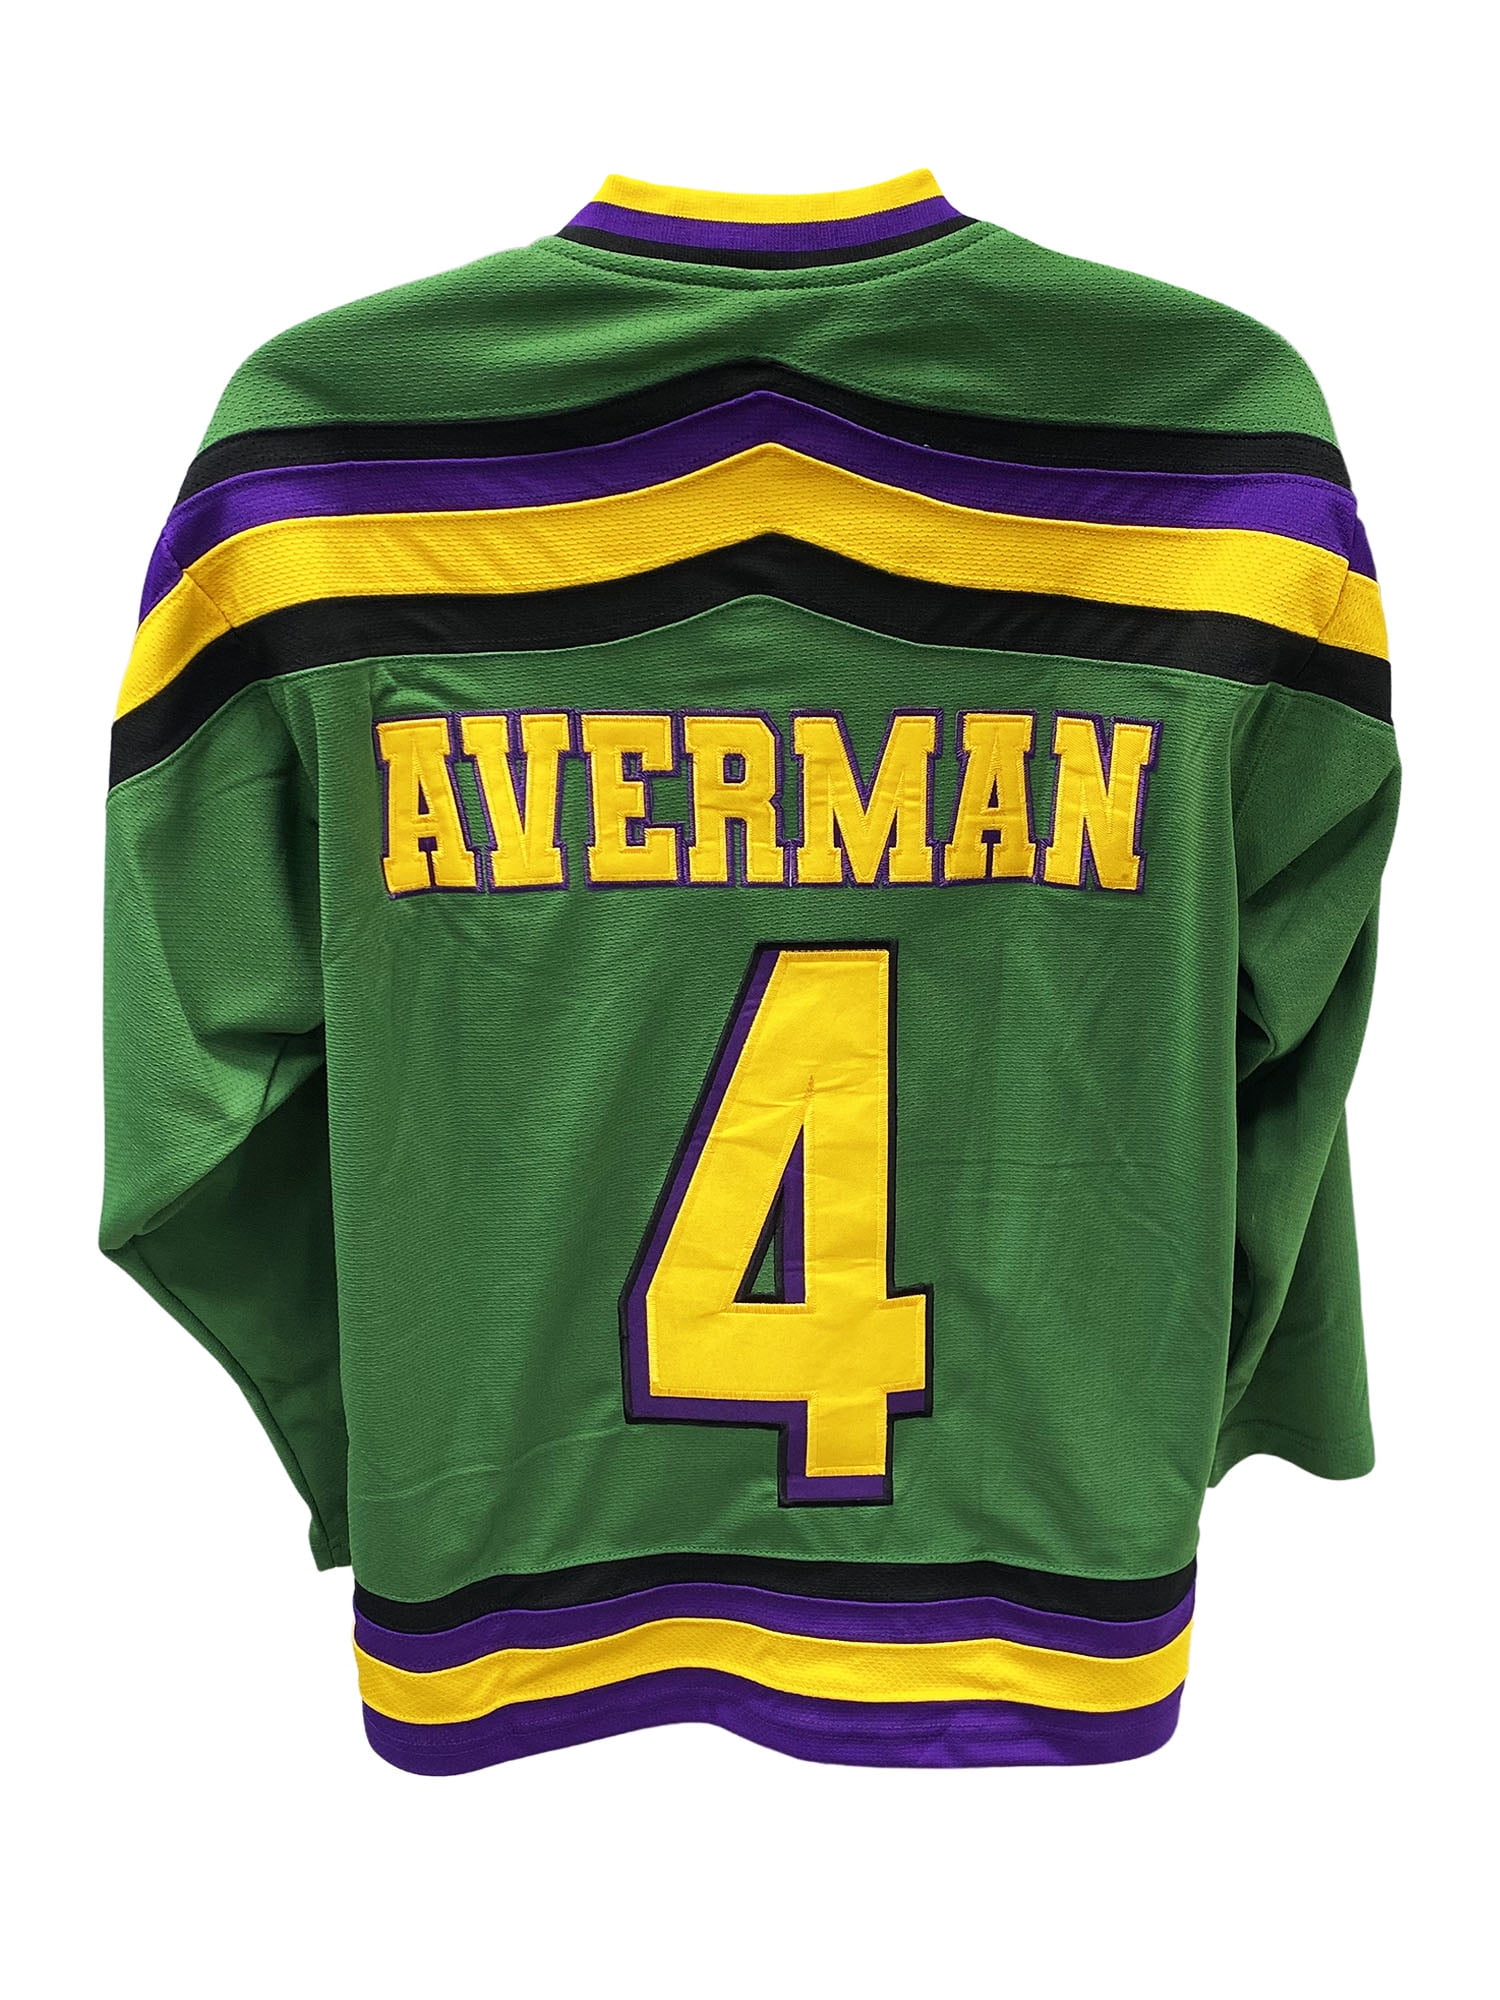 Les Averman 4 Ducks Hockey Jersey Embroidered Costume Mighty Movie Uniform